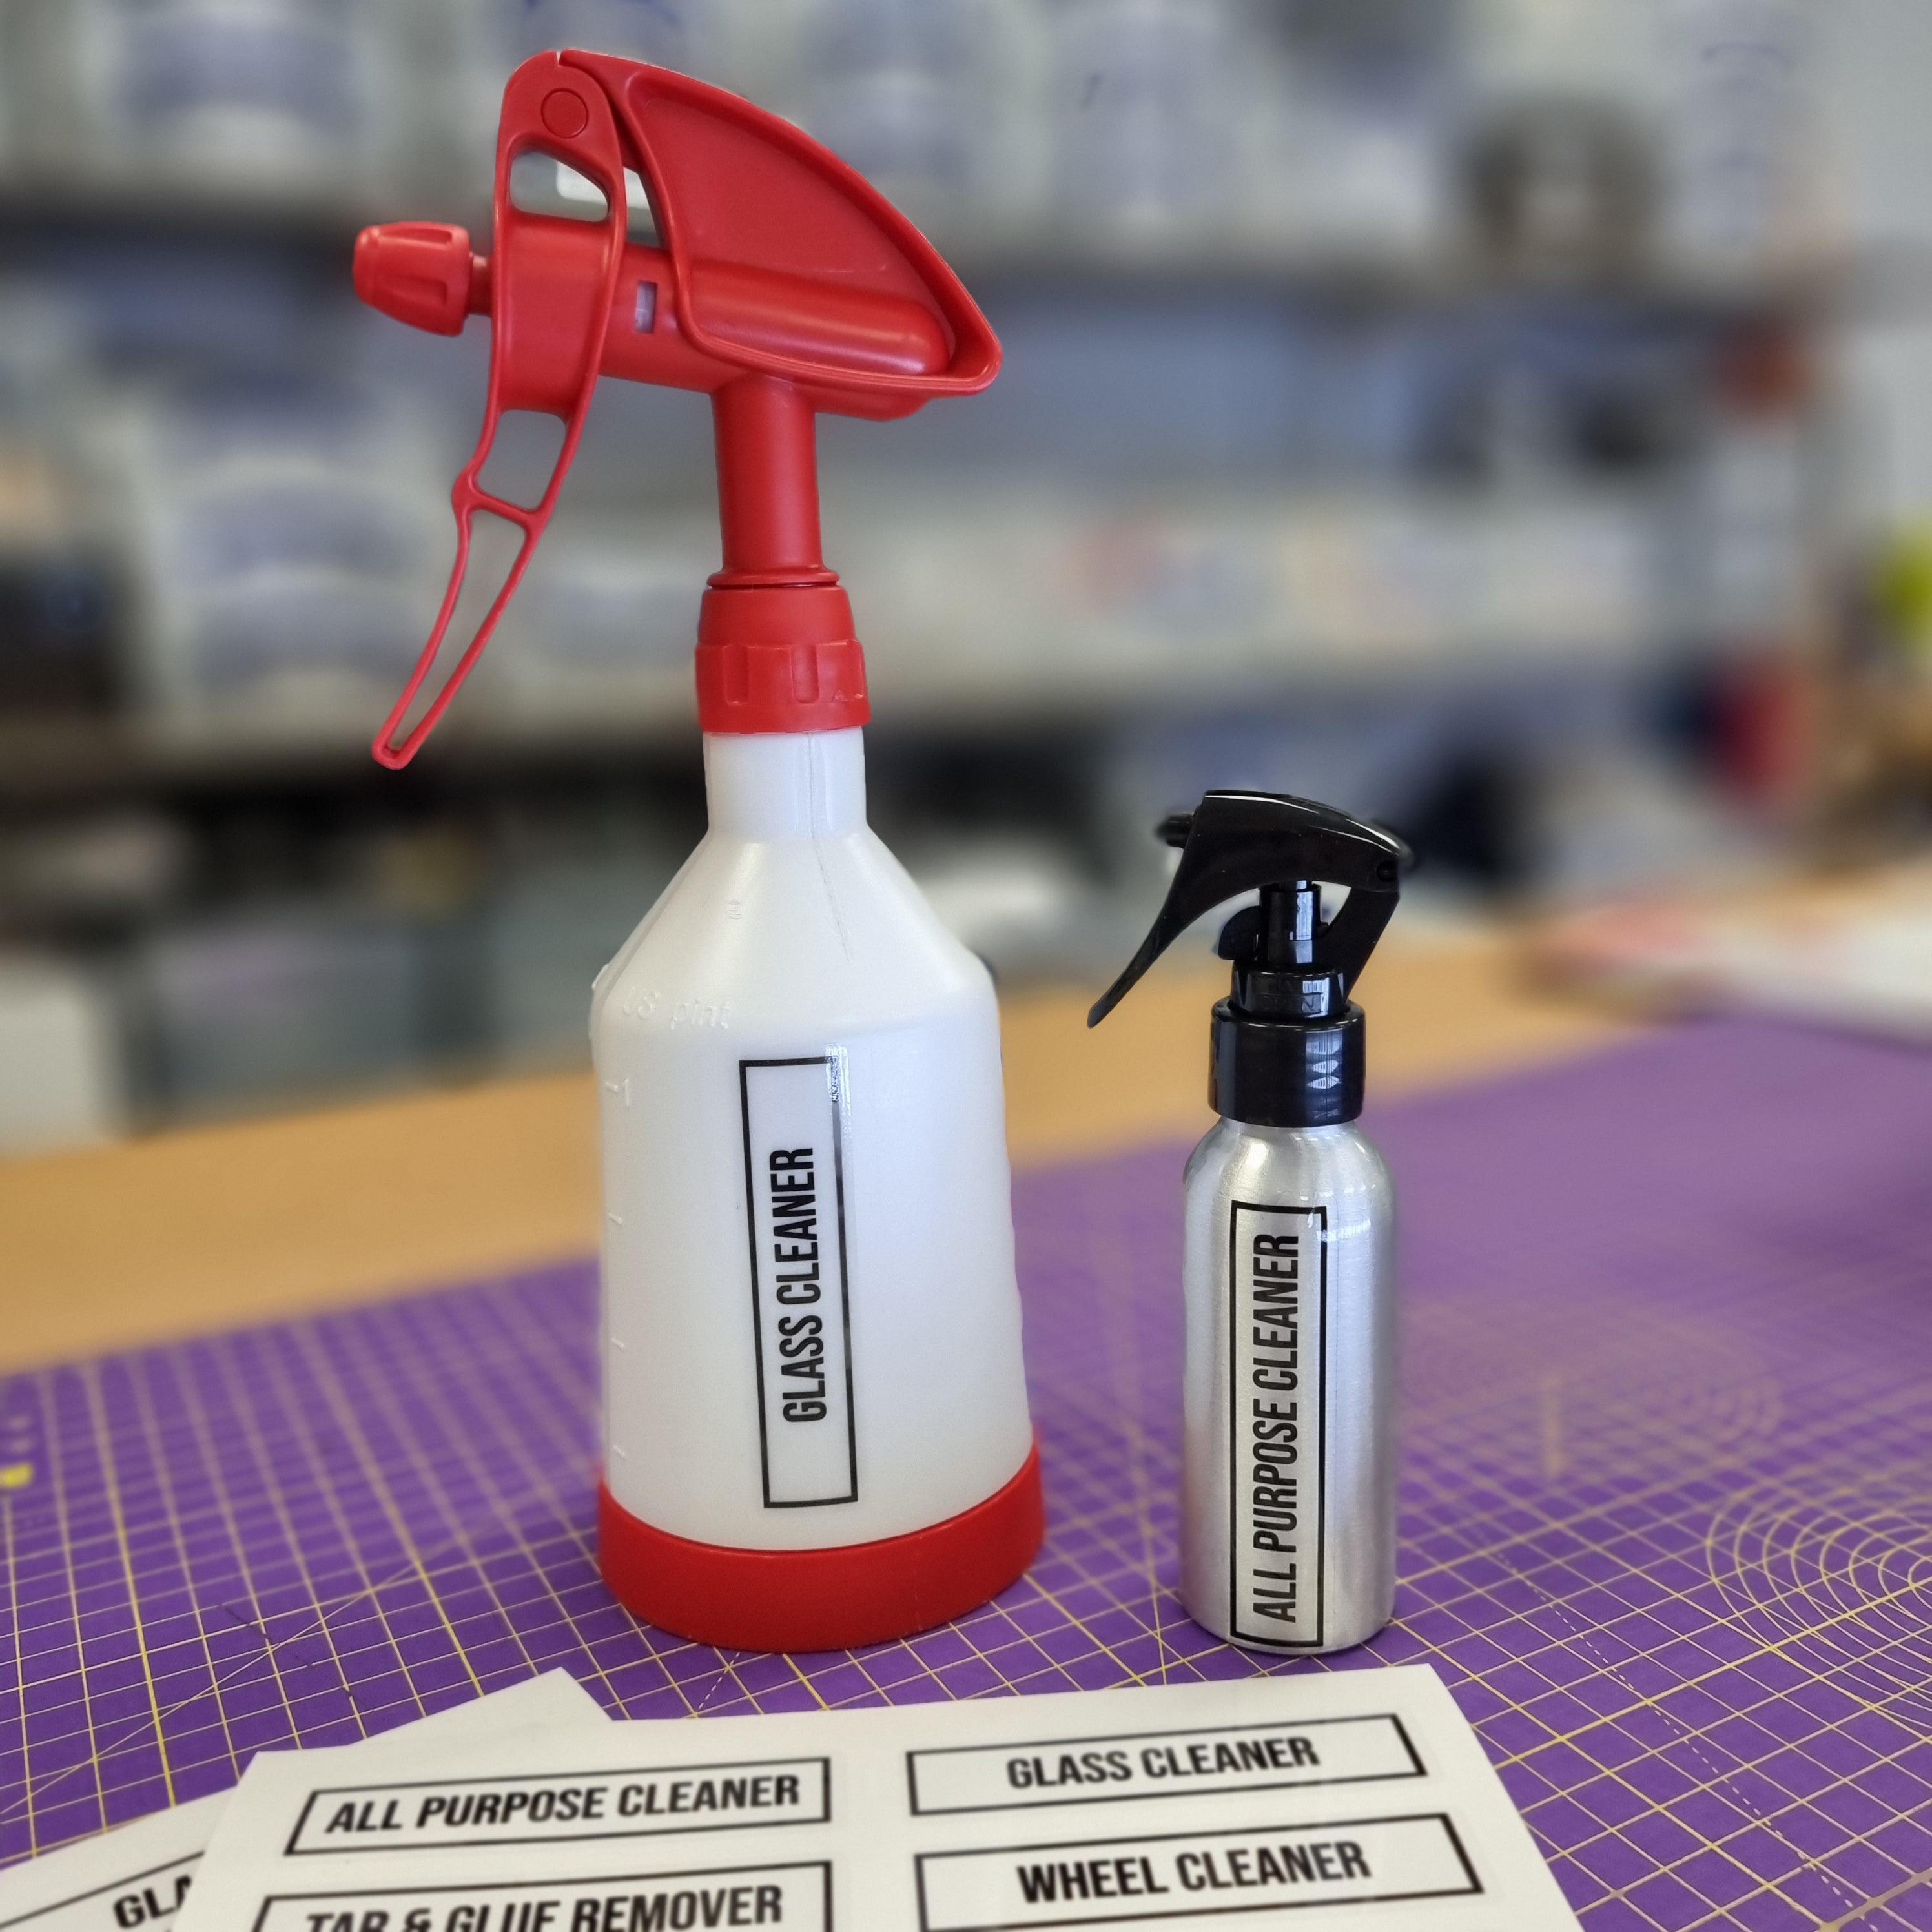 Vehicle Cleaning / Detailing Spray Bottle Label Set – PrintPeel&Stick